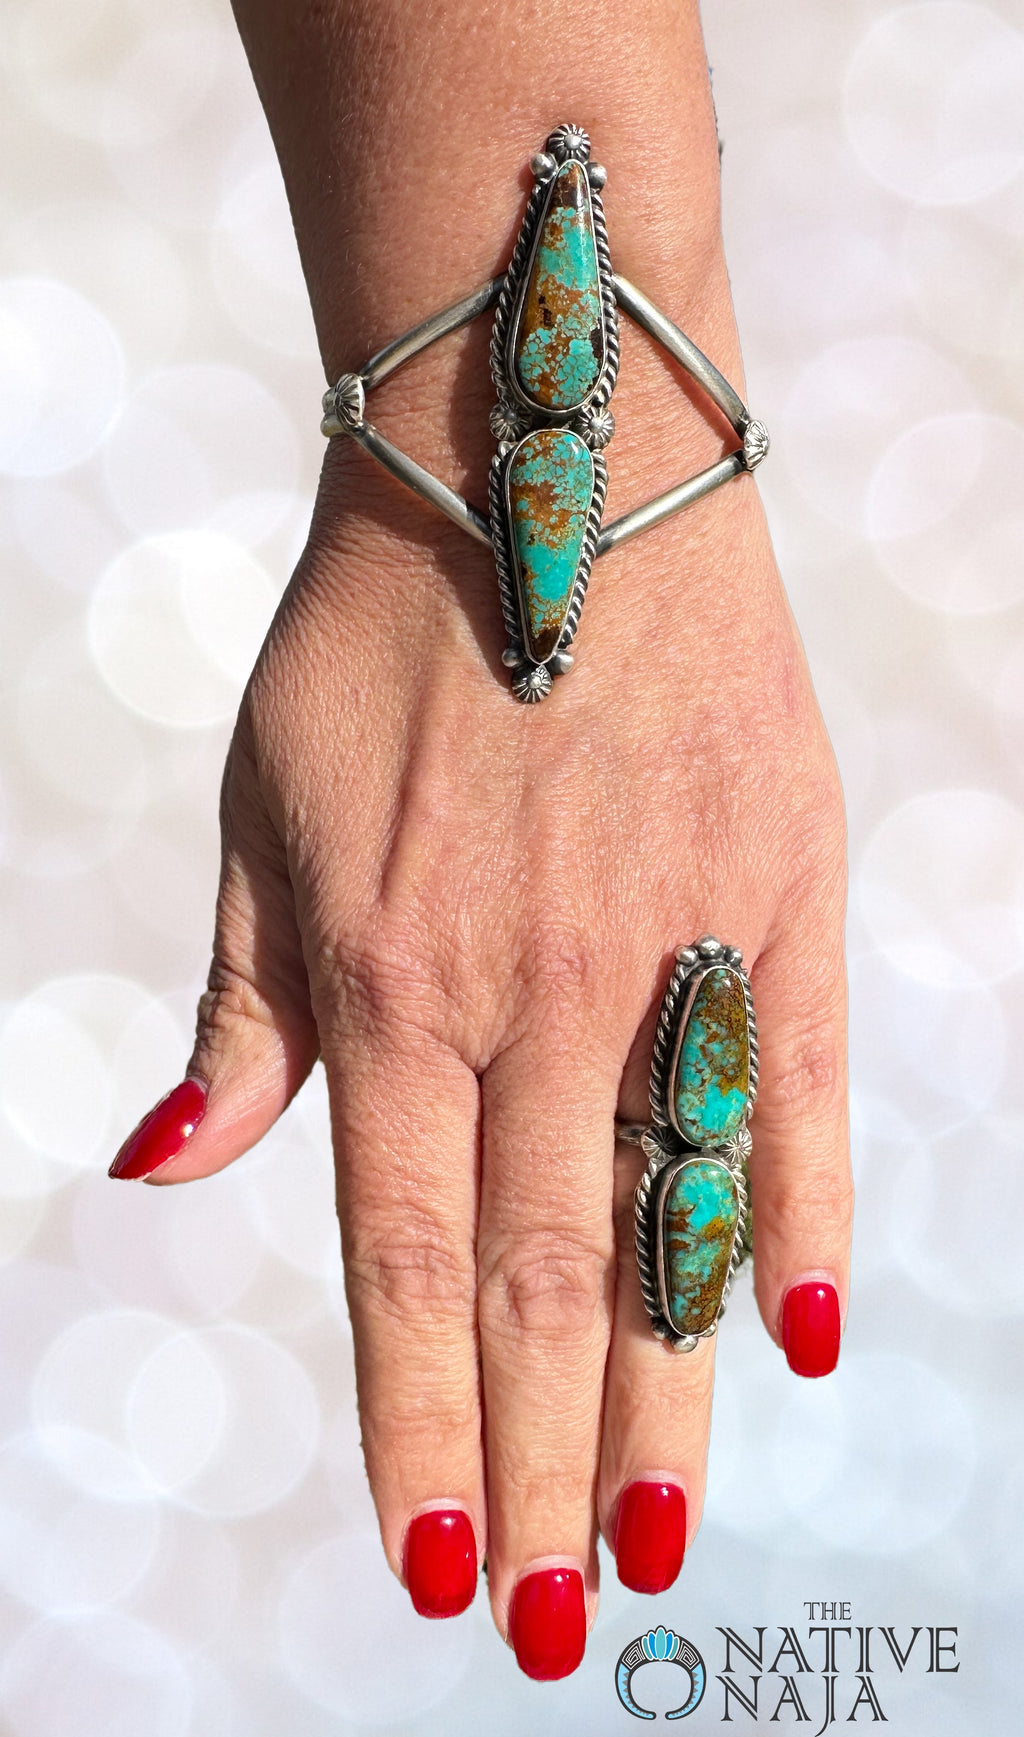 Navajo Robert Shakey Sterling Silver & Mine #8 Turquoise Cuff Bracelet BR124